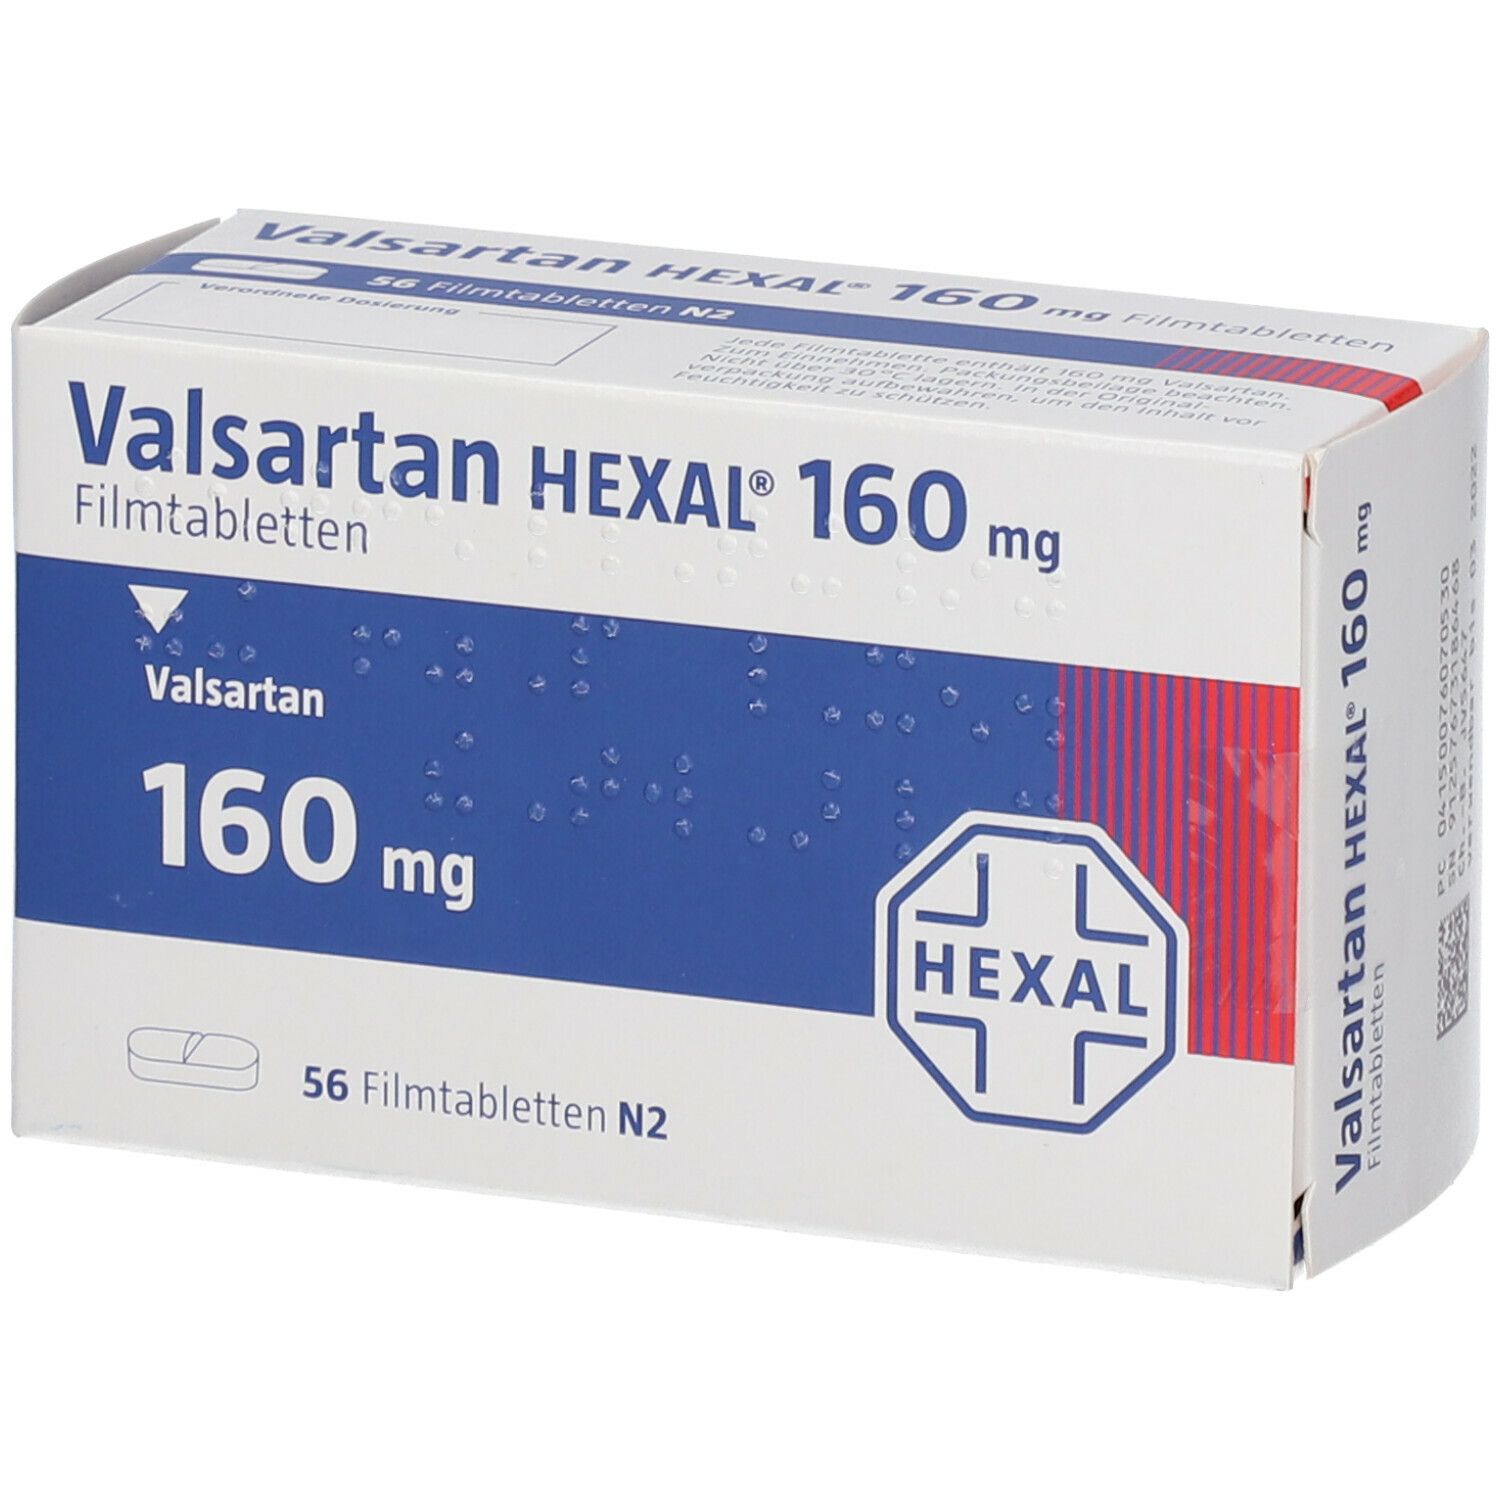 Valsartan HEXAL® 160 mg